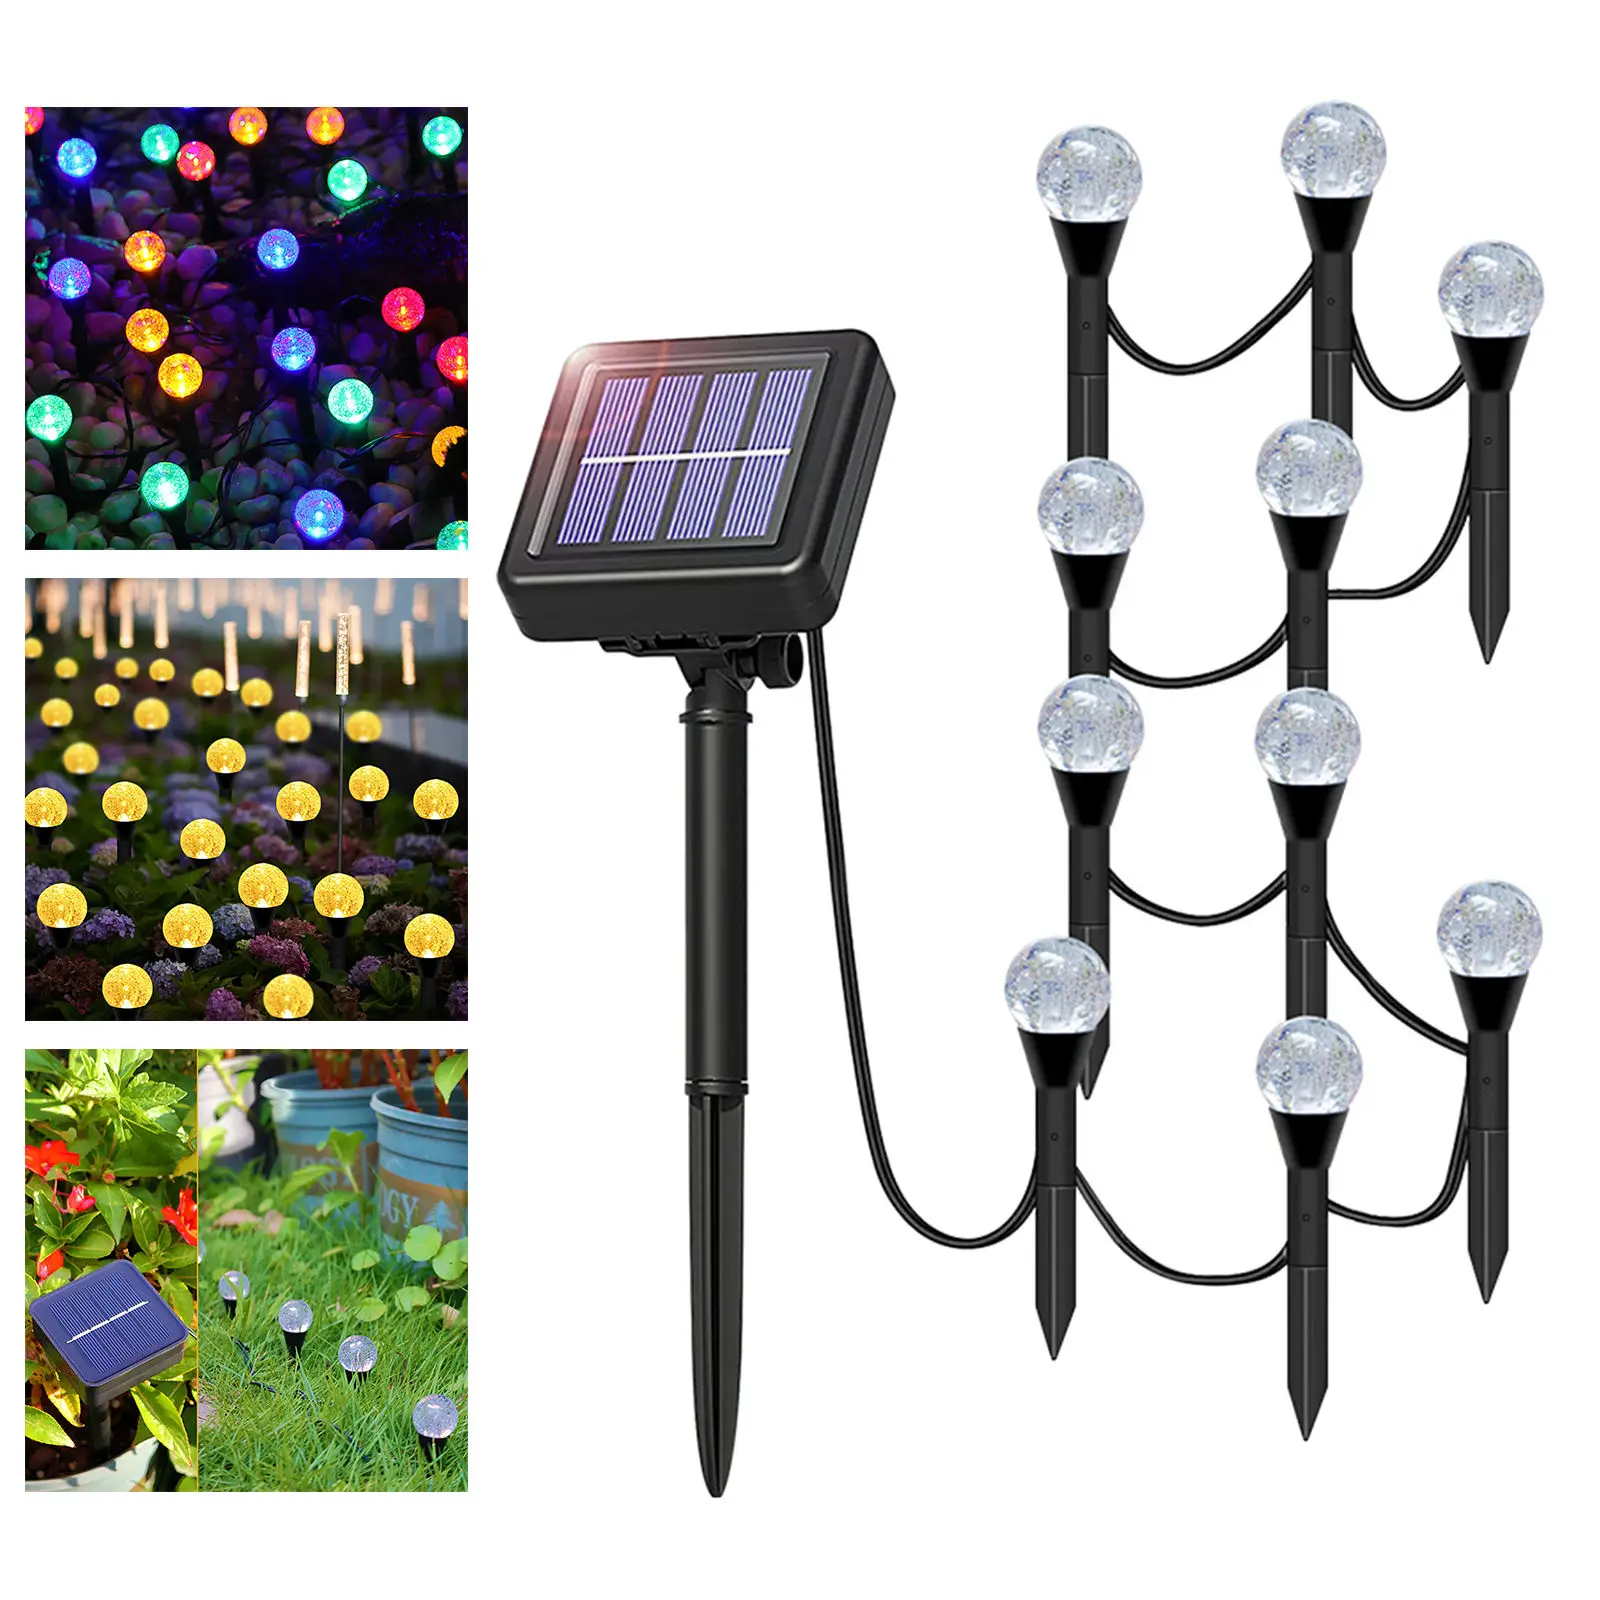 Waterproof Outdoor Solar Powered Light Garden Led Lights Garden Stake for Yard Lawn Pathway Patio Walkway Landscape